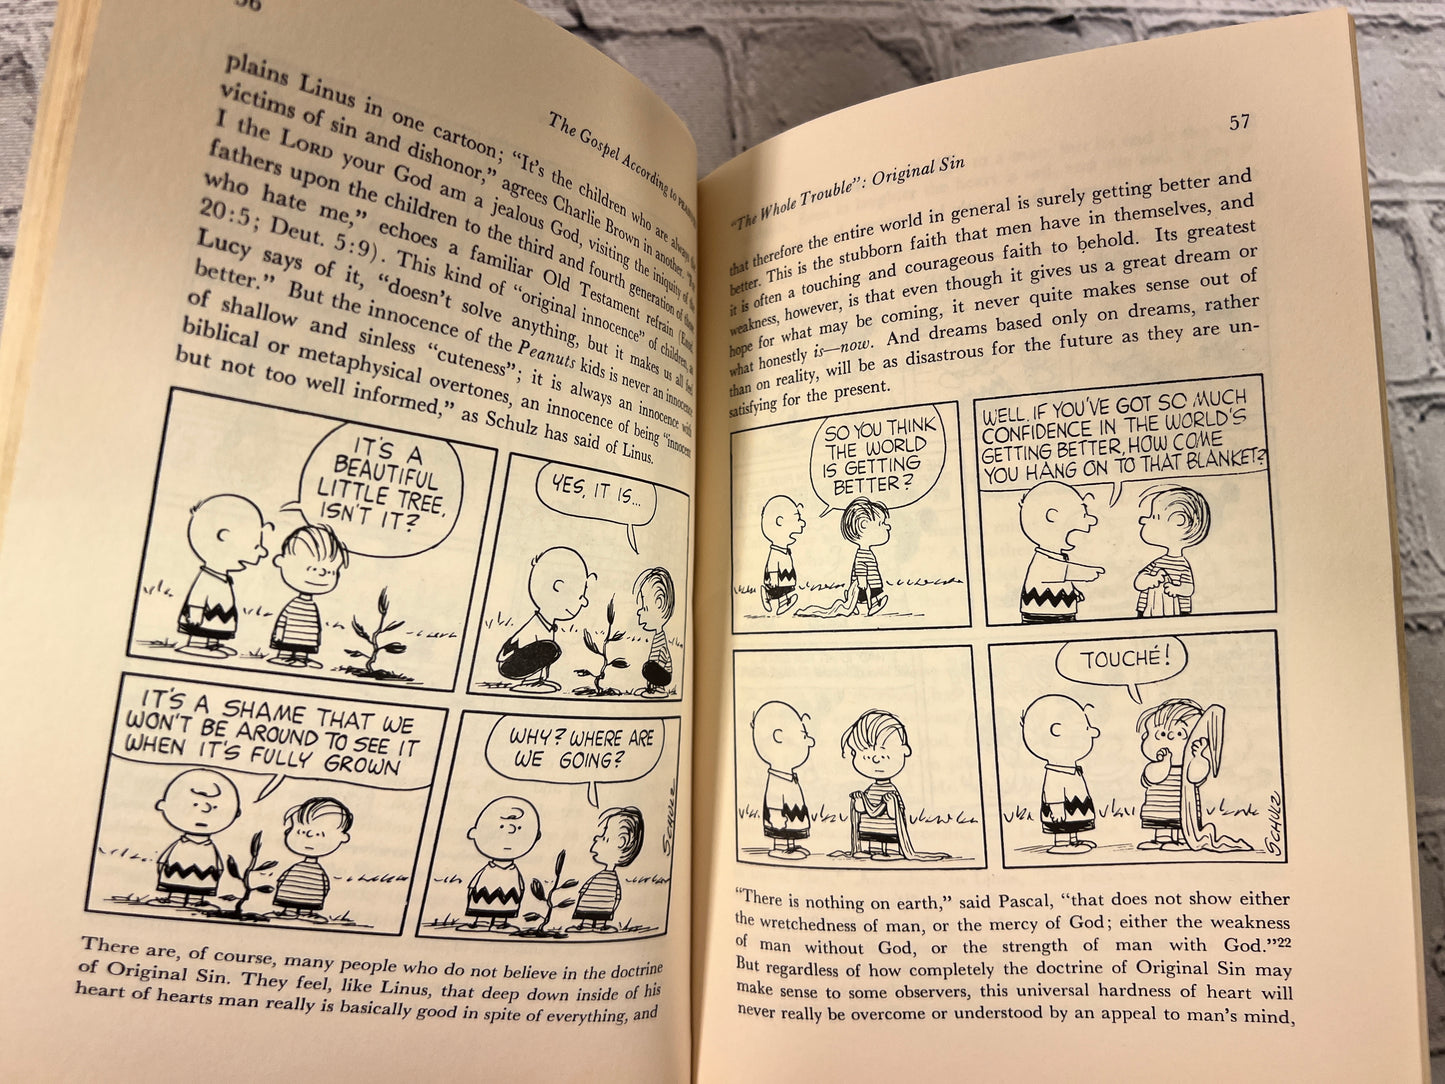 The Gospel According to Peanuts by Robert L. Short [1967]